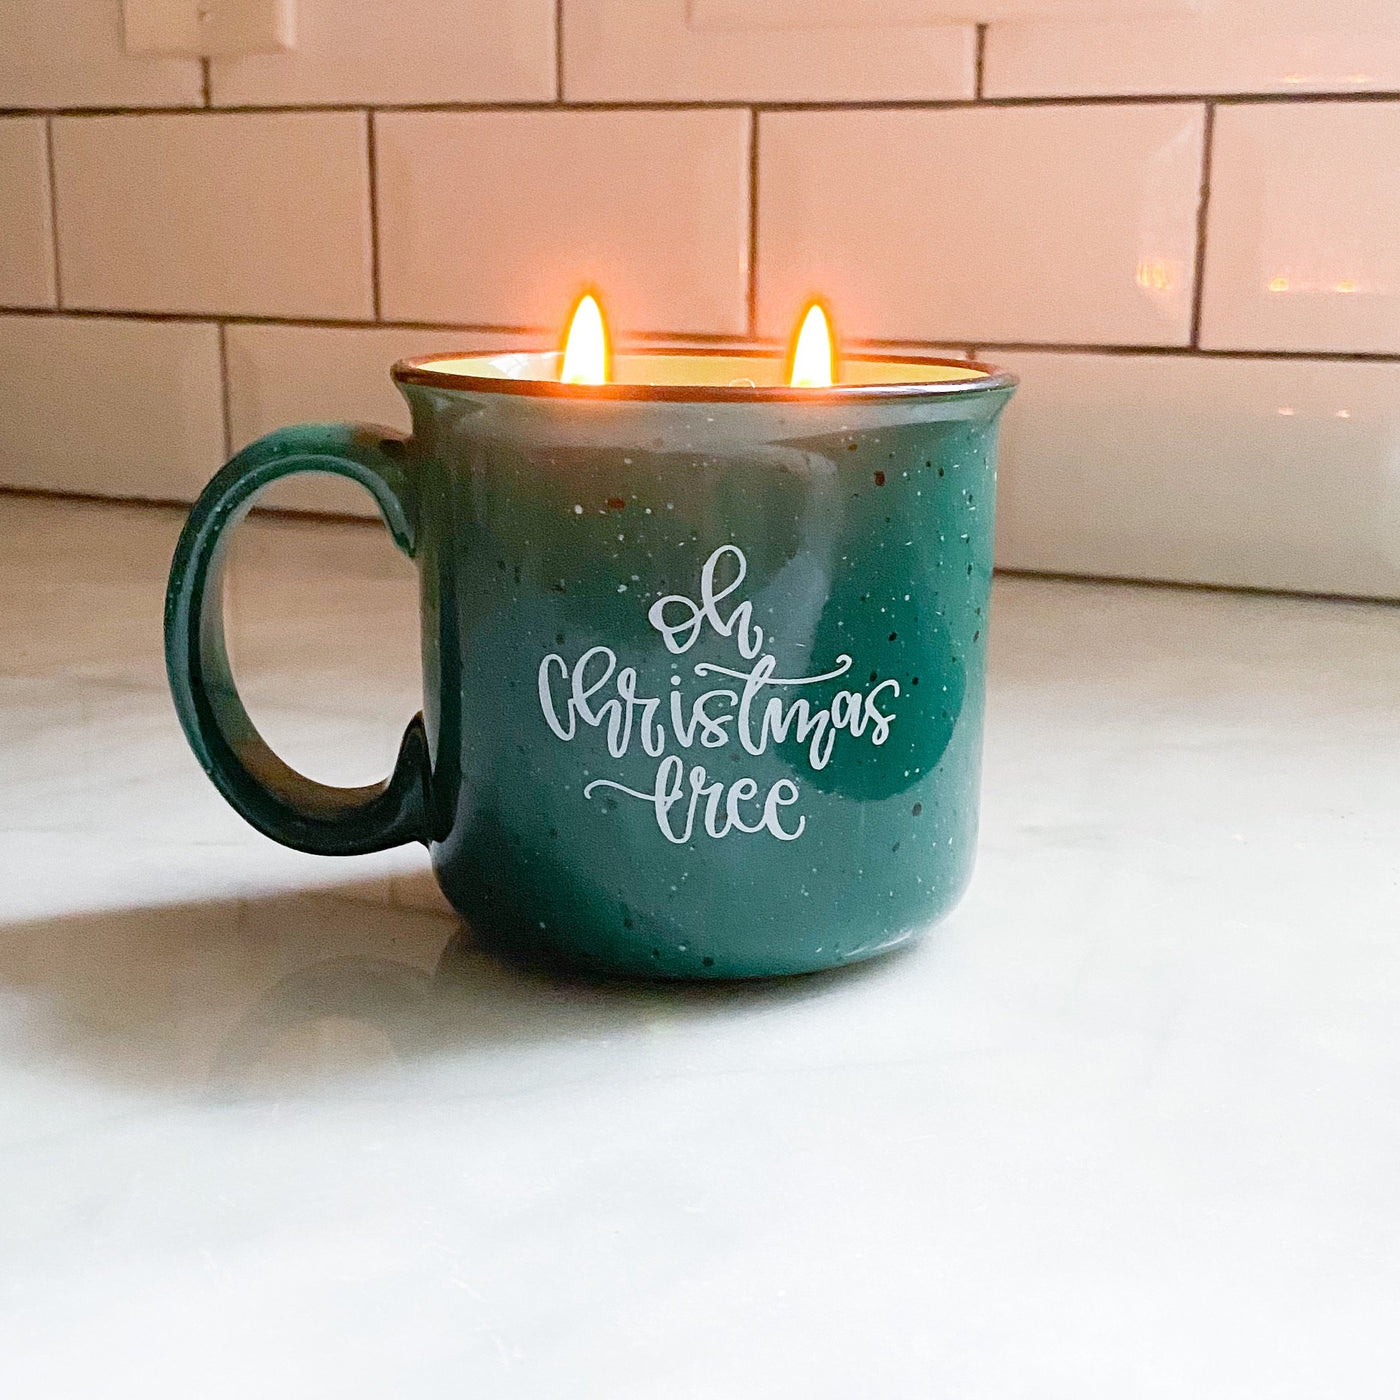 Oh, Christmas Tree Mug Candle - Pretty Honest Candles